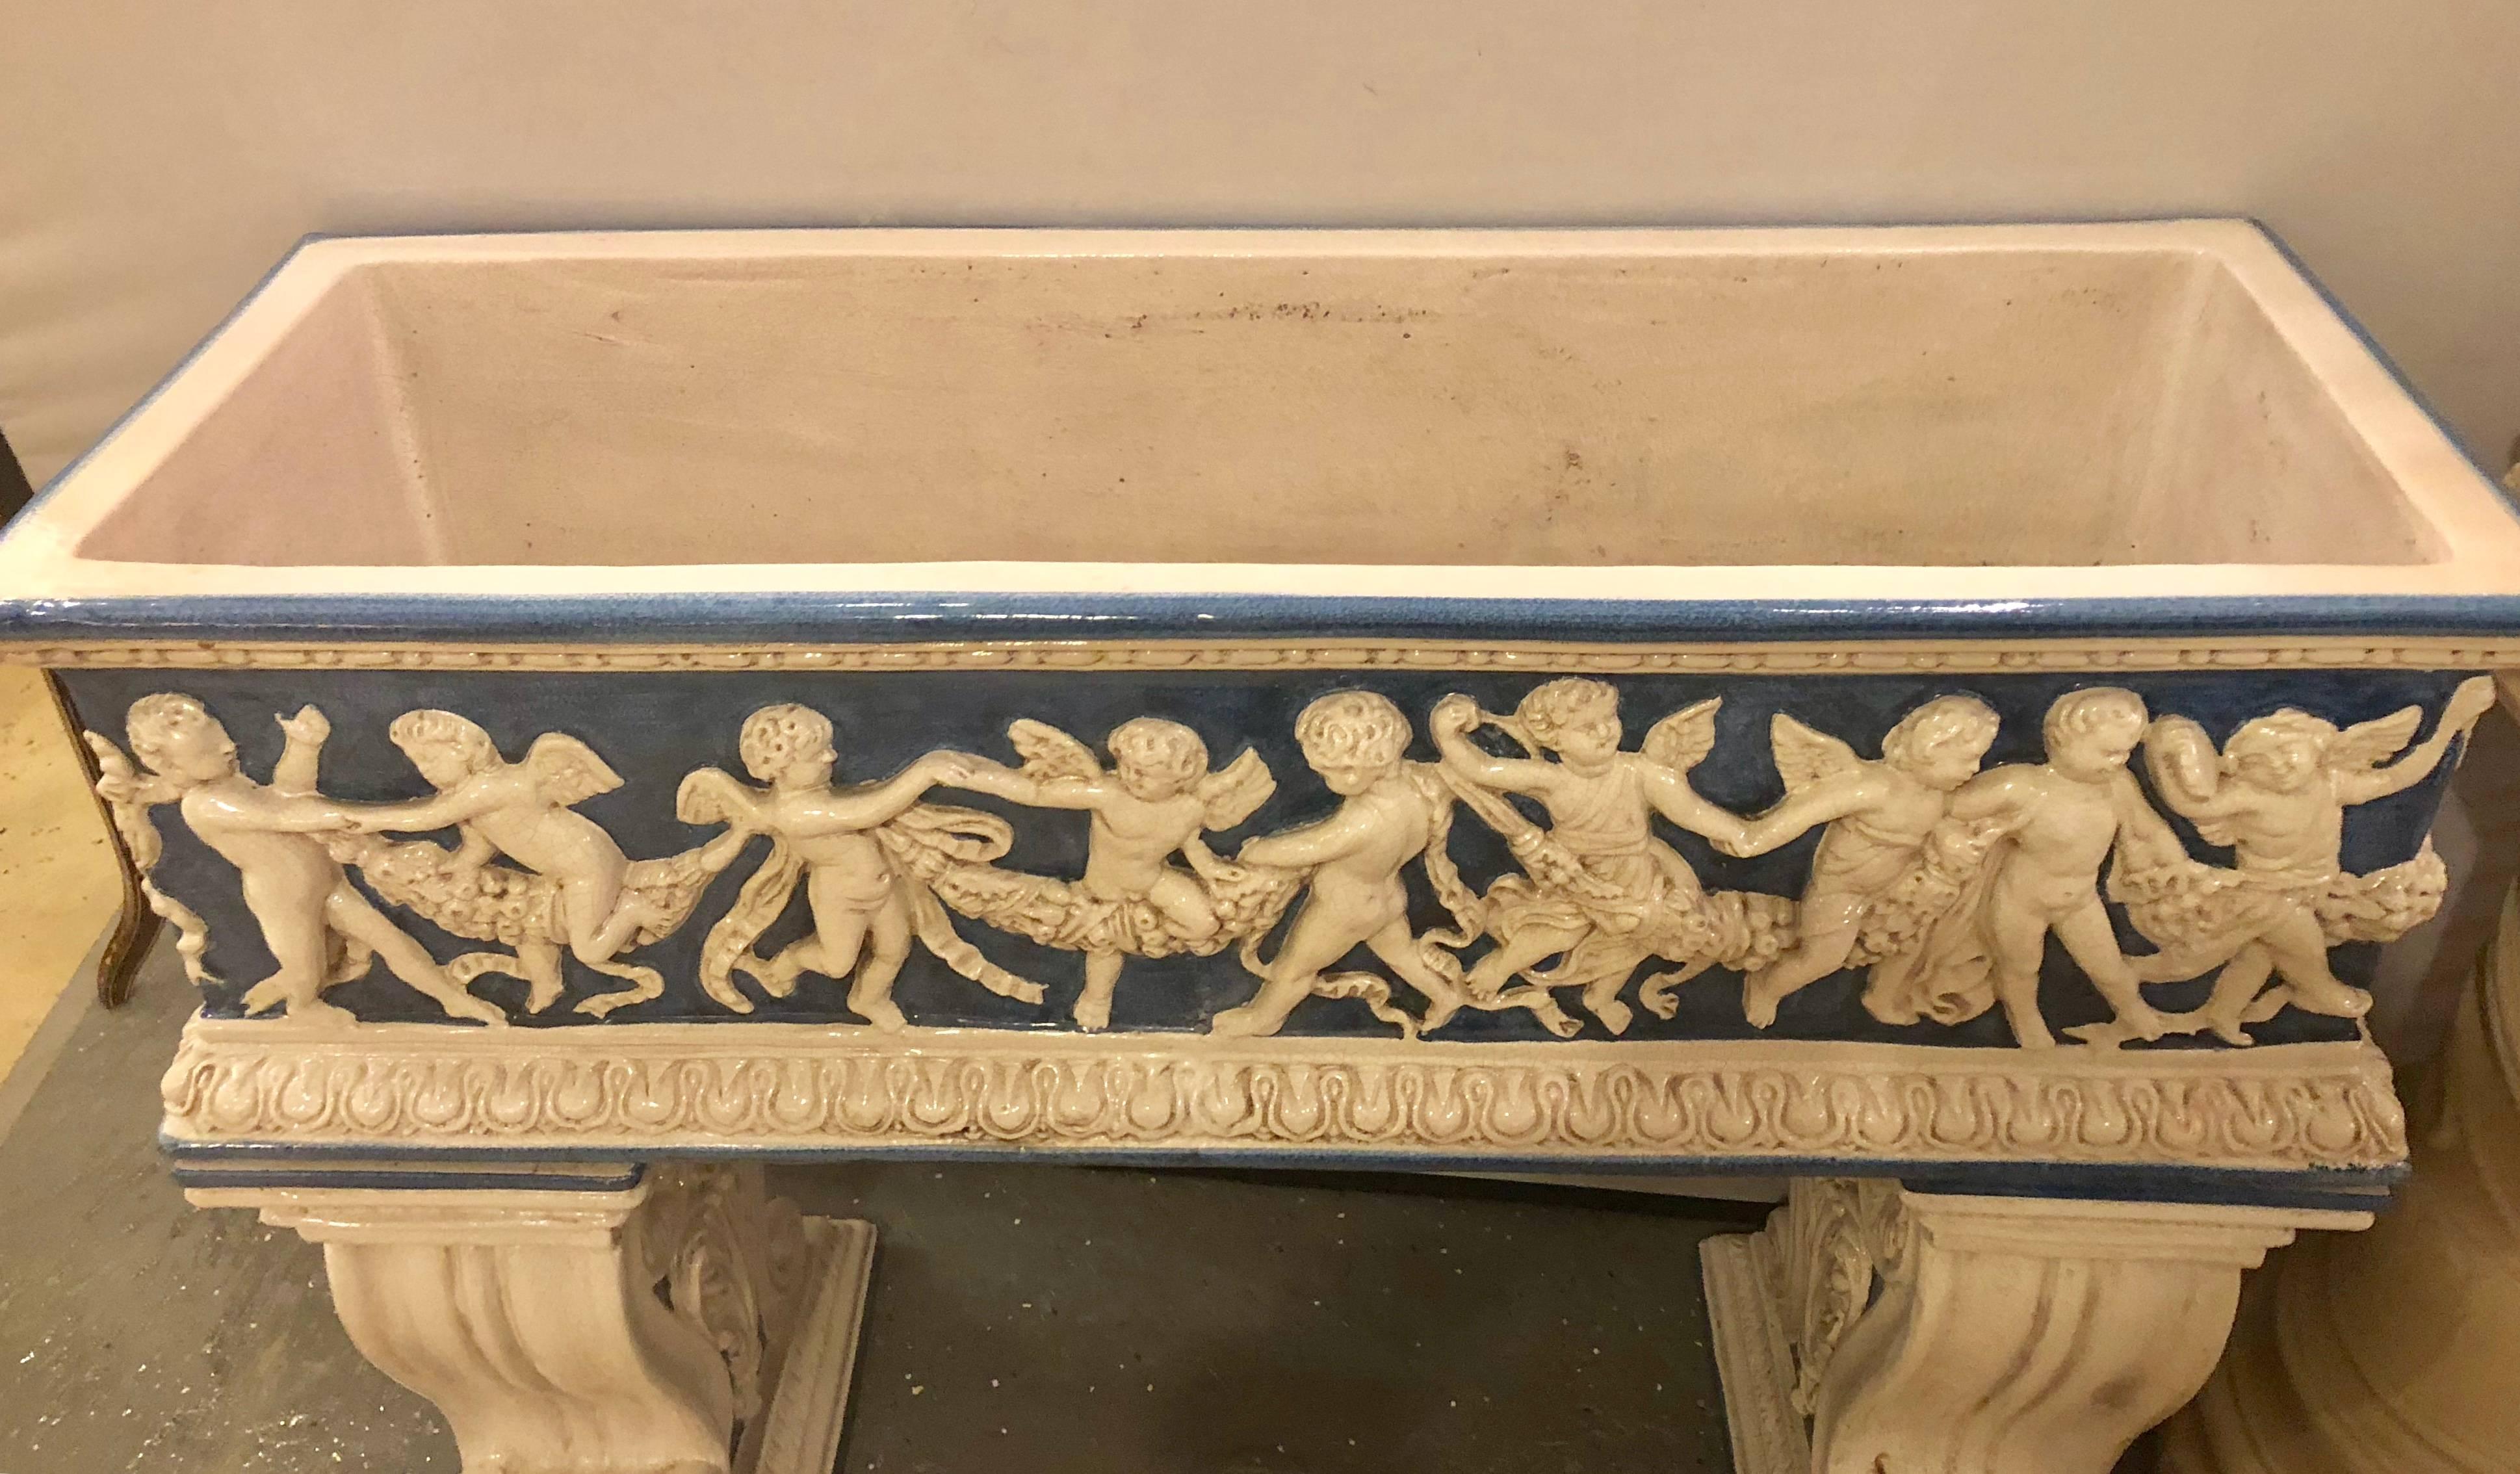 20th Century Pair of Neoclassical Style Ceramic Planter Tops Depicting Cherubs Dancing